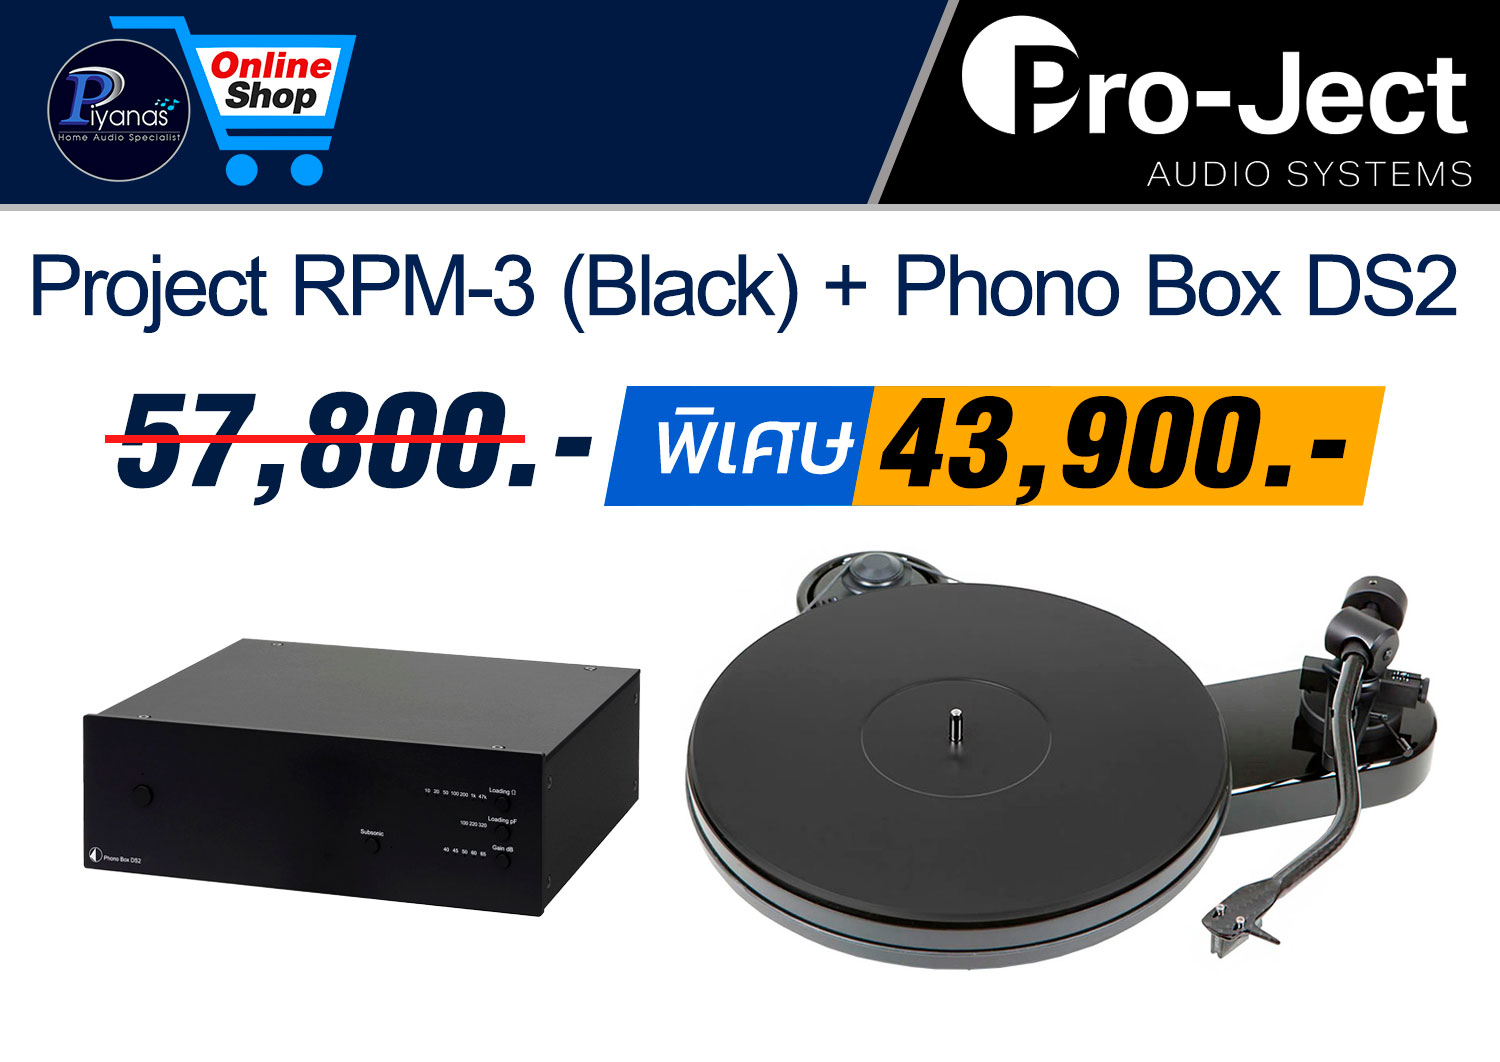 RPM-3 Carbon (Piano Black)
+ Phono box DS2